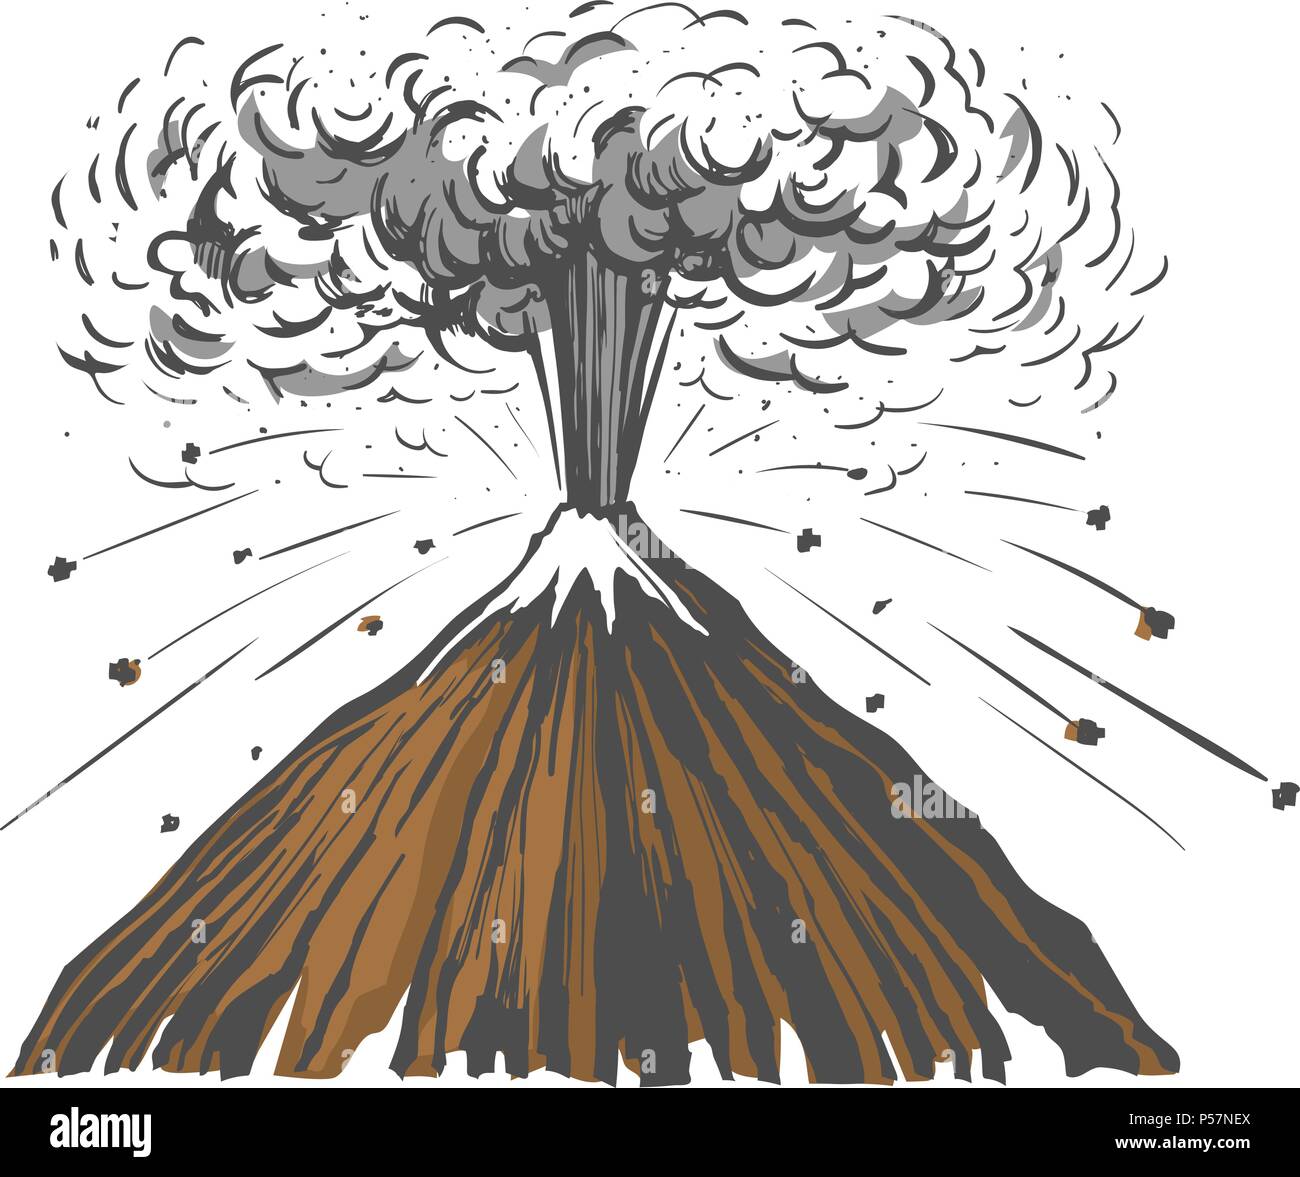 Nature scene with volcano eruption illustration Stock Vector Image  Art   Alamy